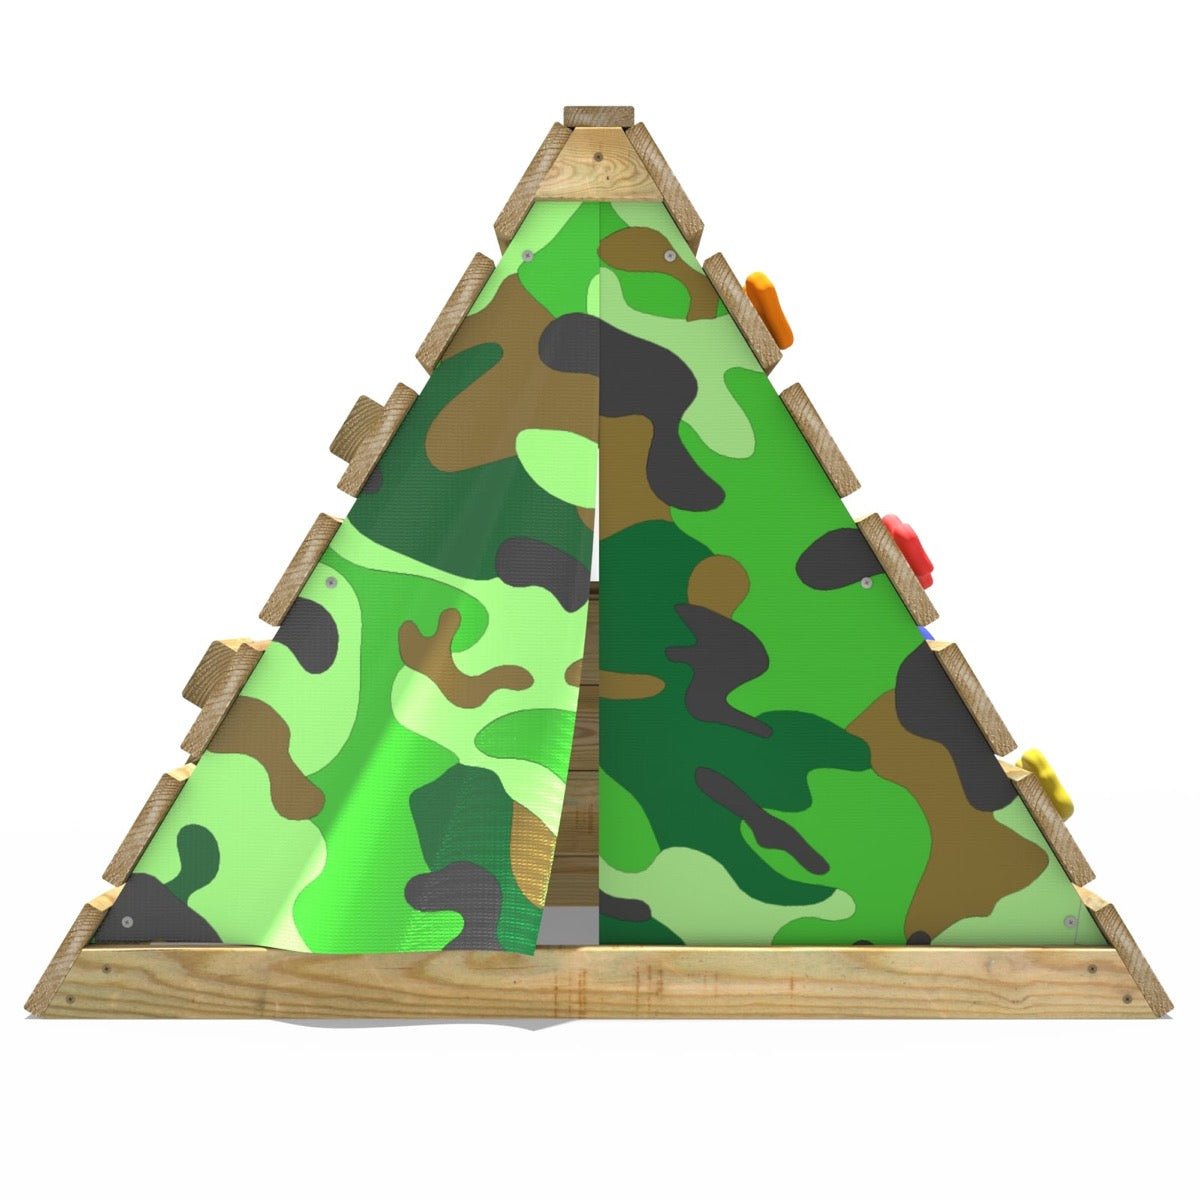 Rebo Mini Wooden Climbing Pyramid Adventure Playset - Camo